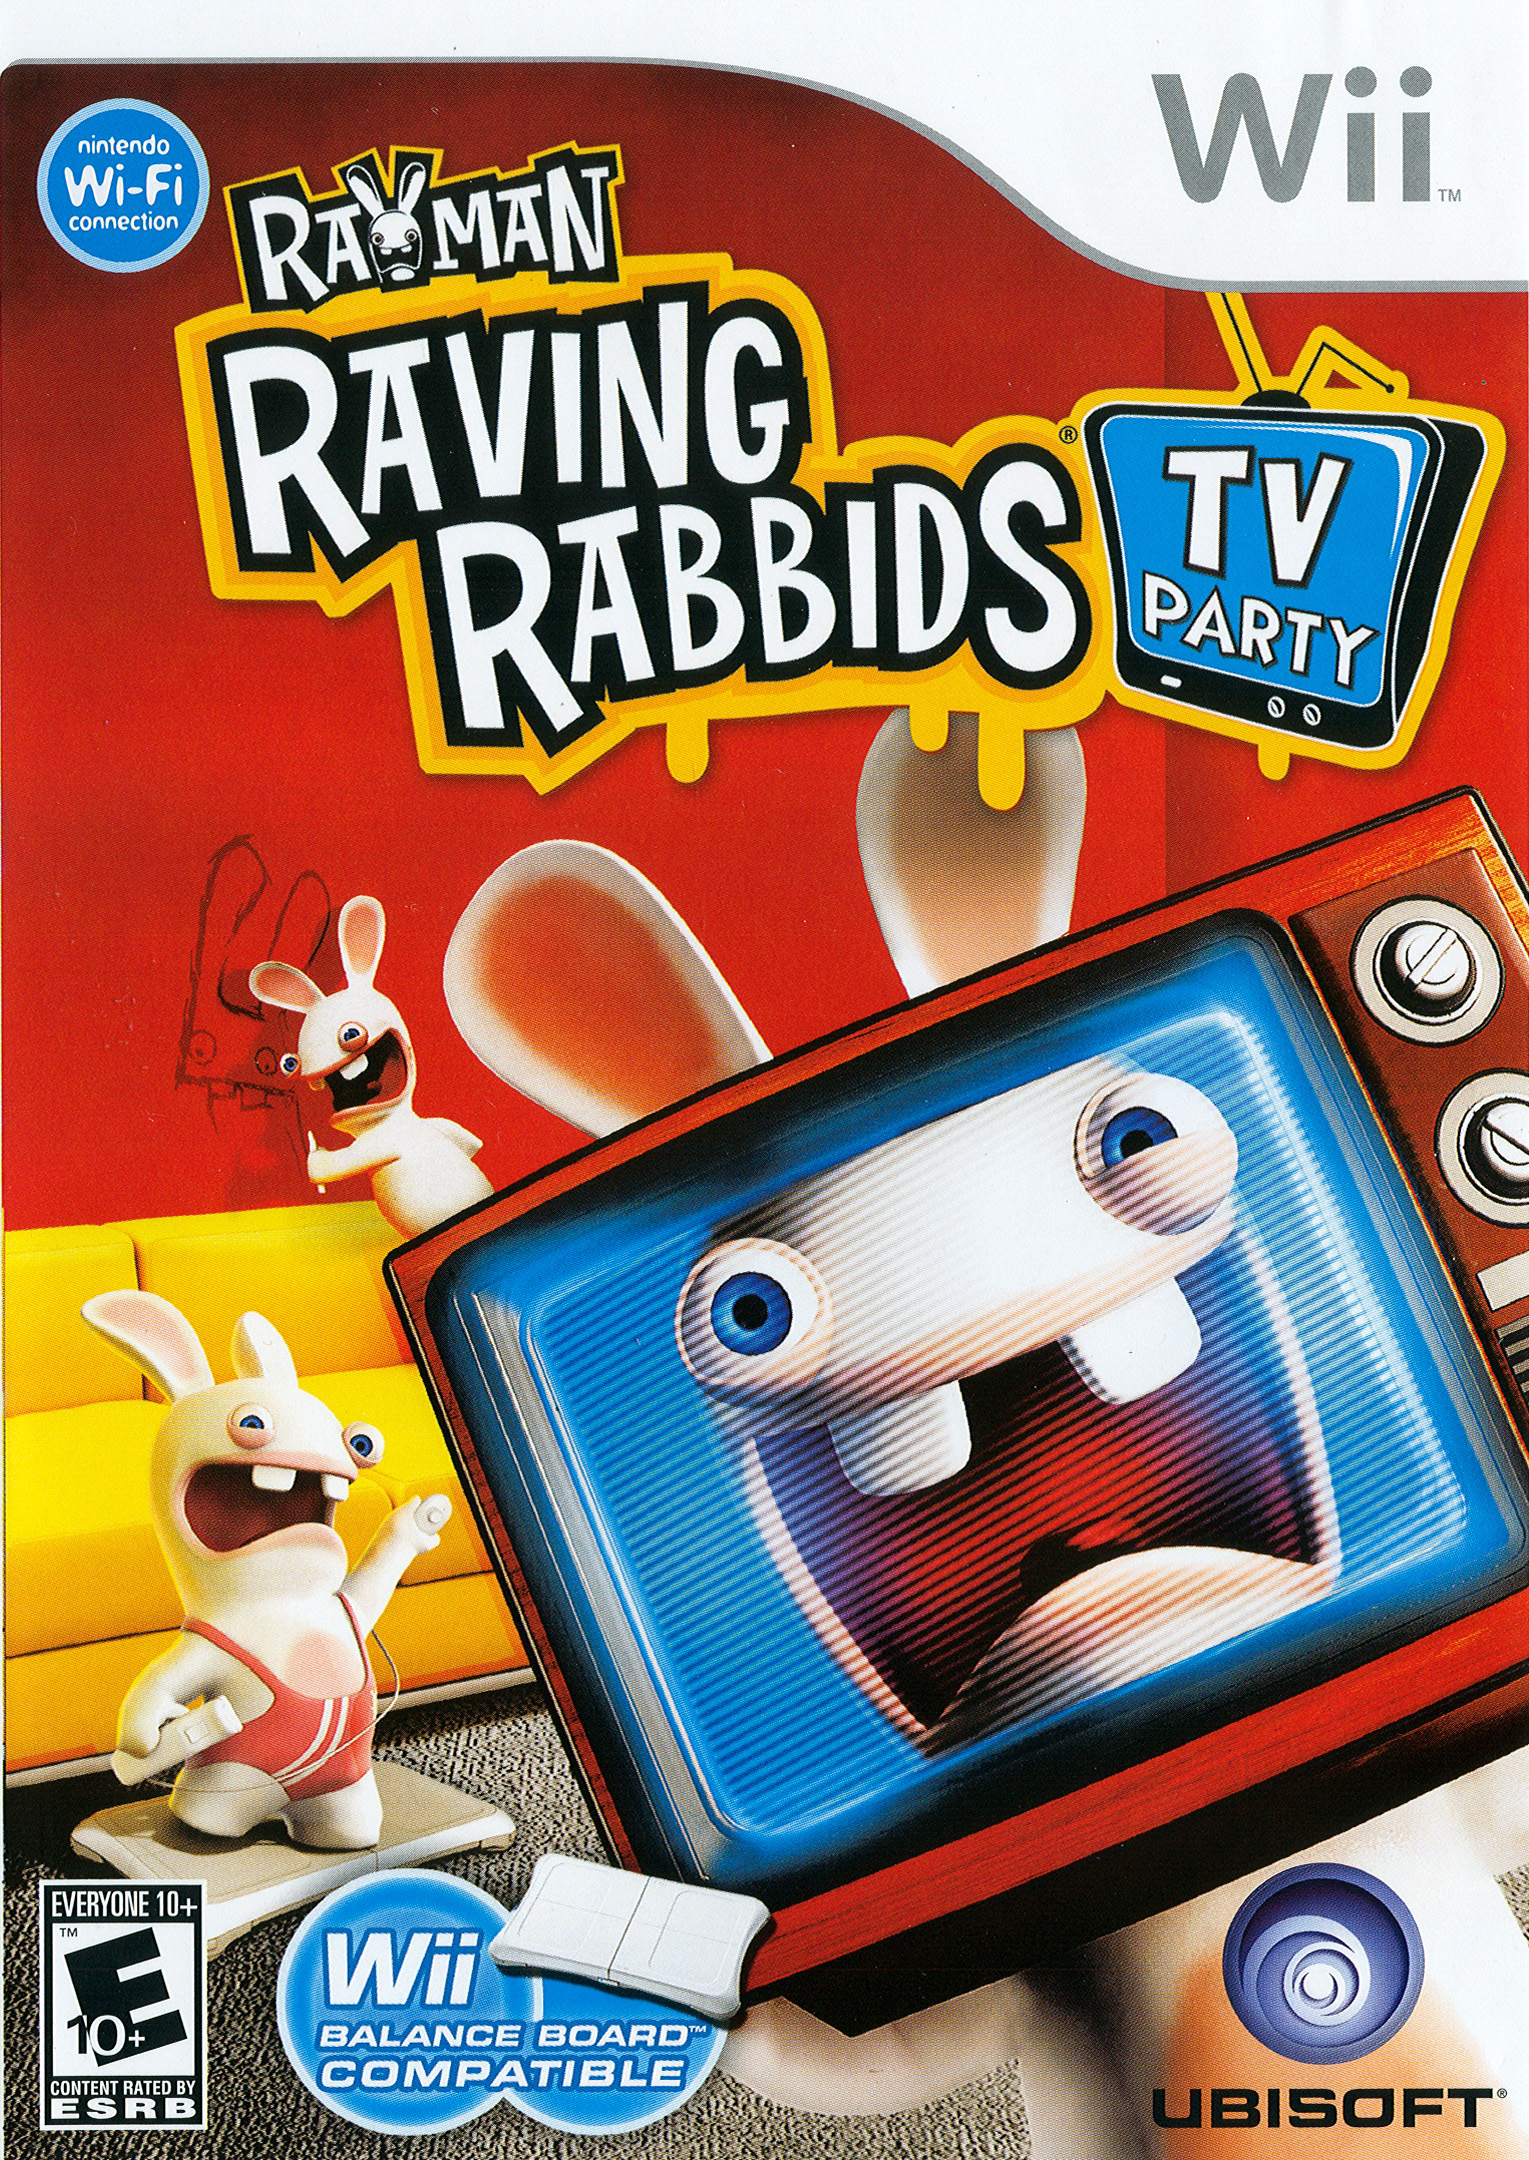 rayman raving rabbids tv party adverts